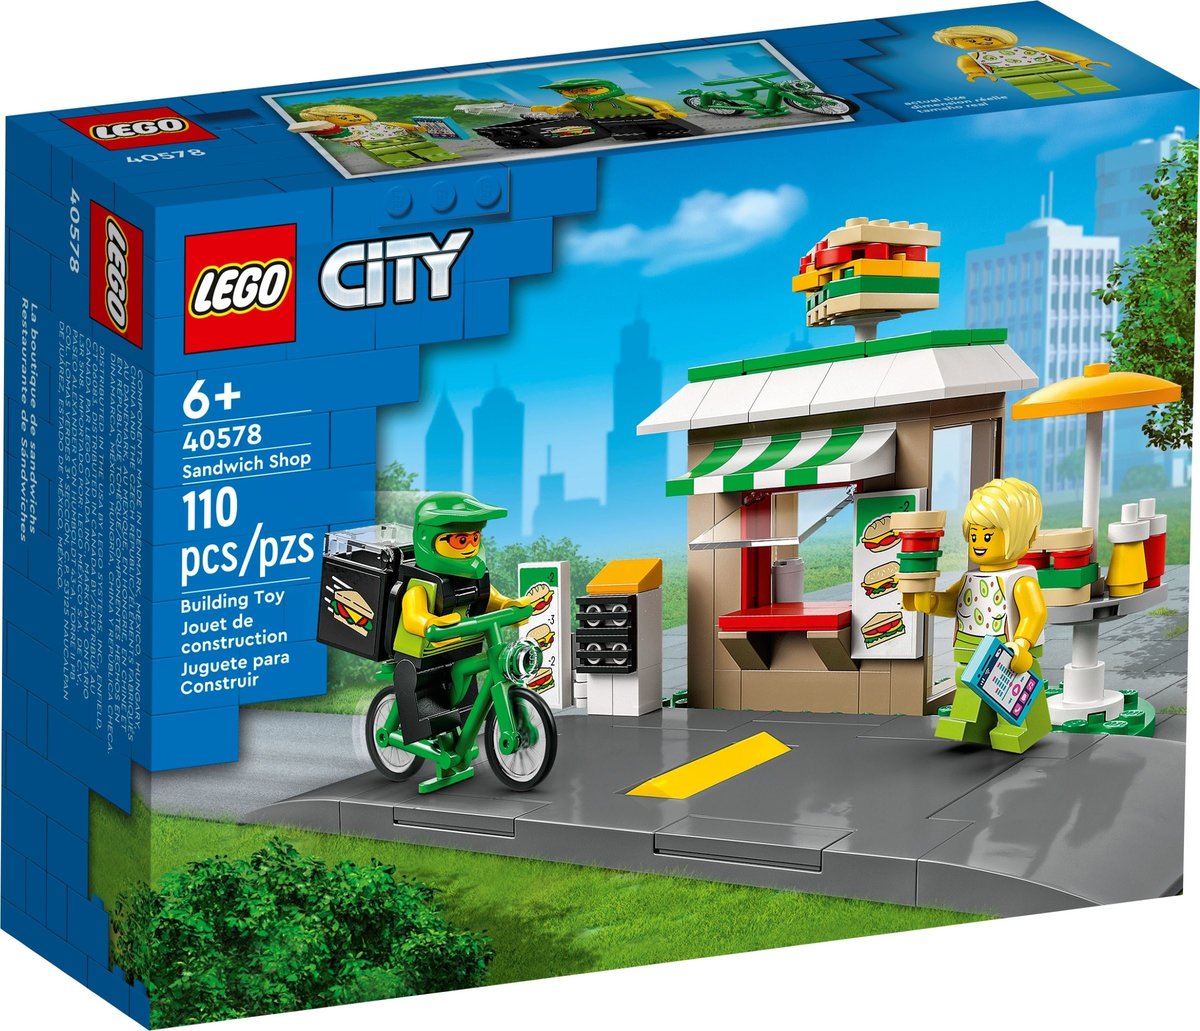 LEGO City klocki Sklepik z kanapkami 40578